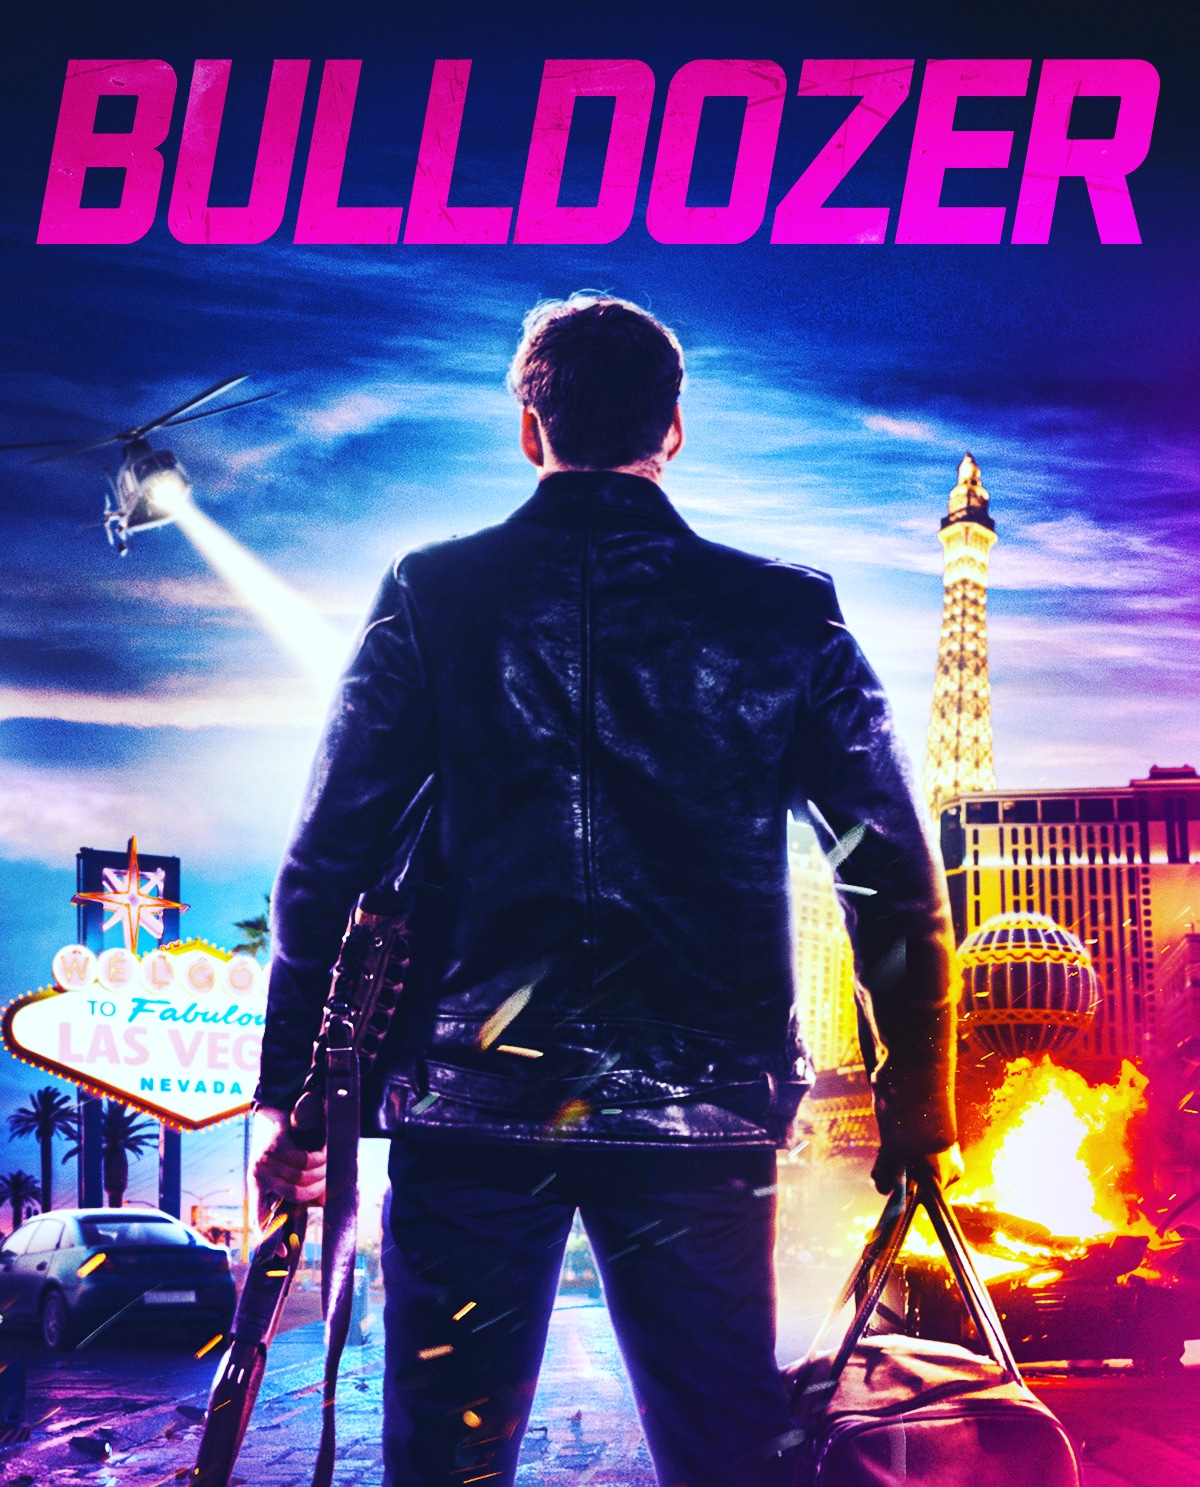 Bulldozer (2021)